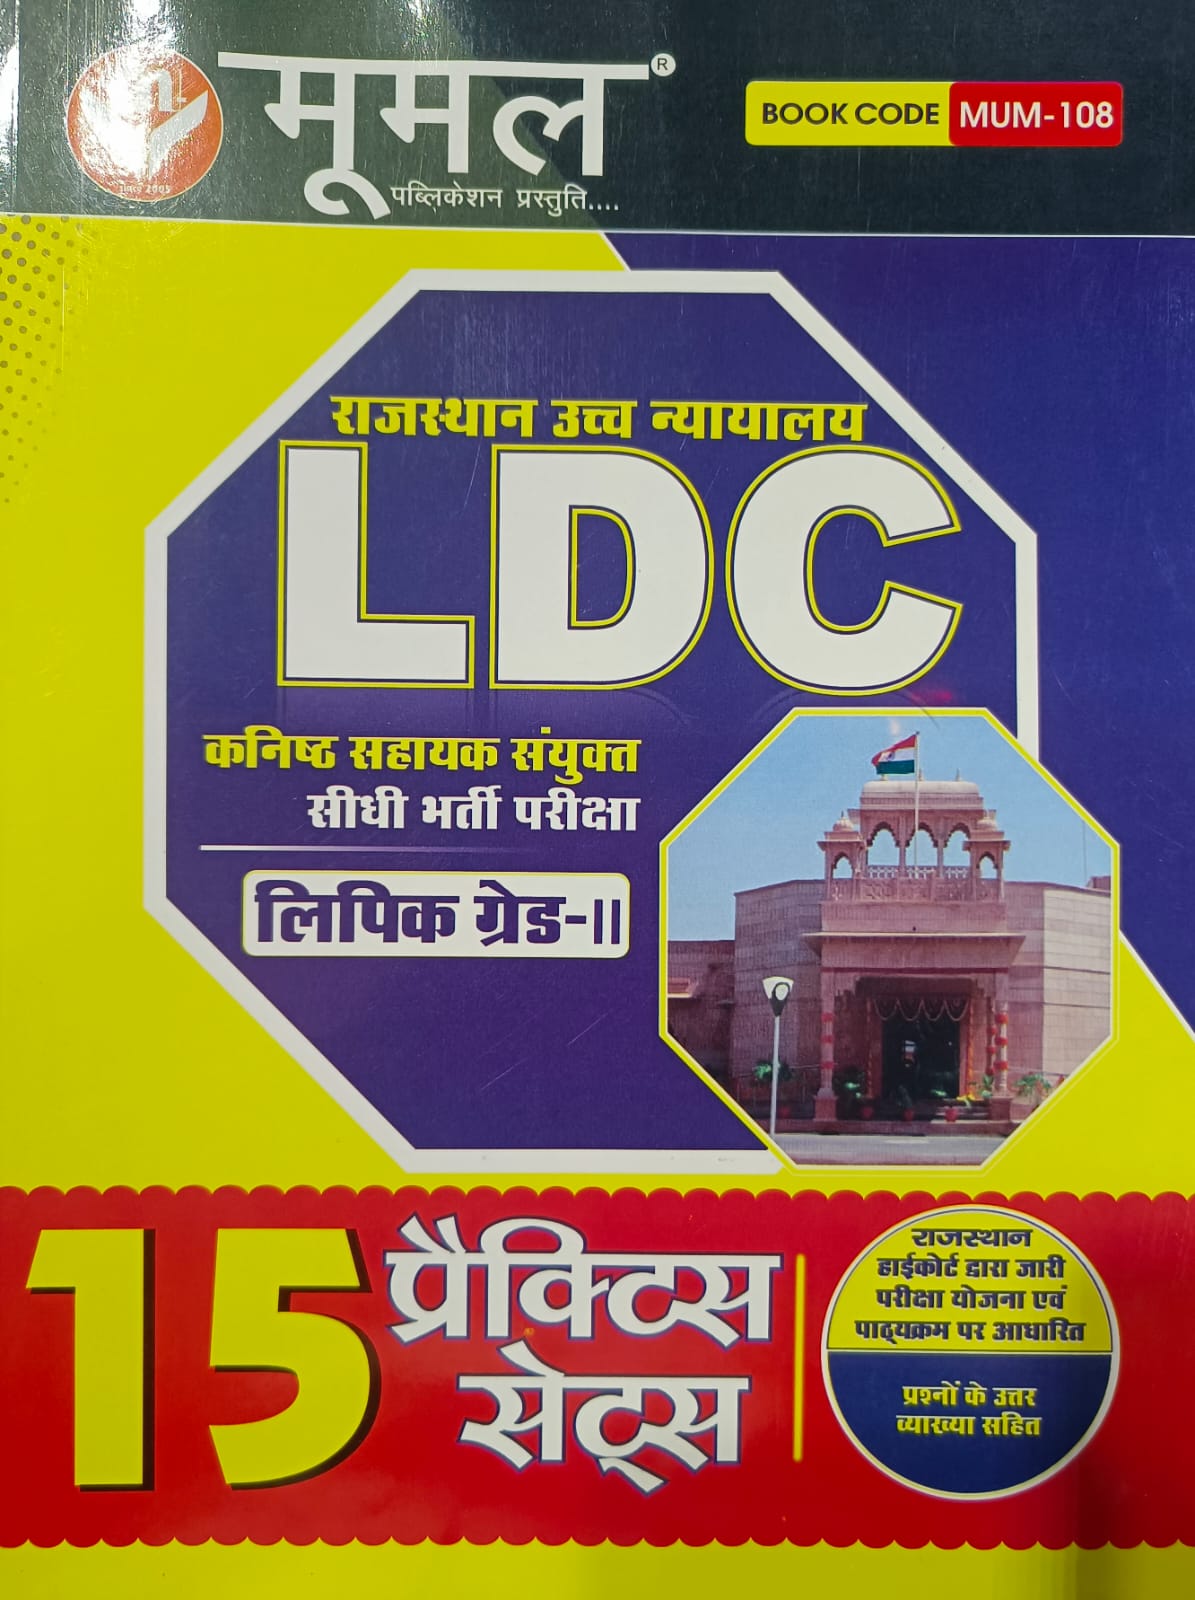 Rajasthan High Court LDC Recruitment 2022. Complete Details